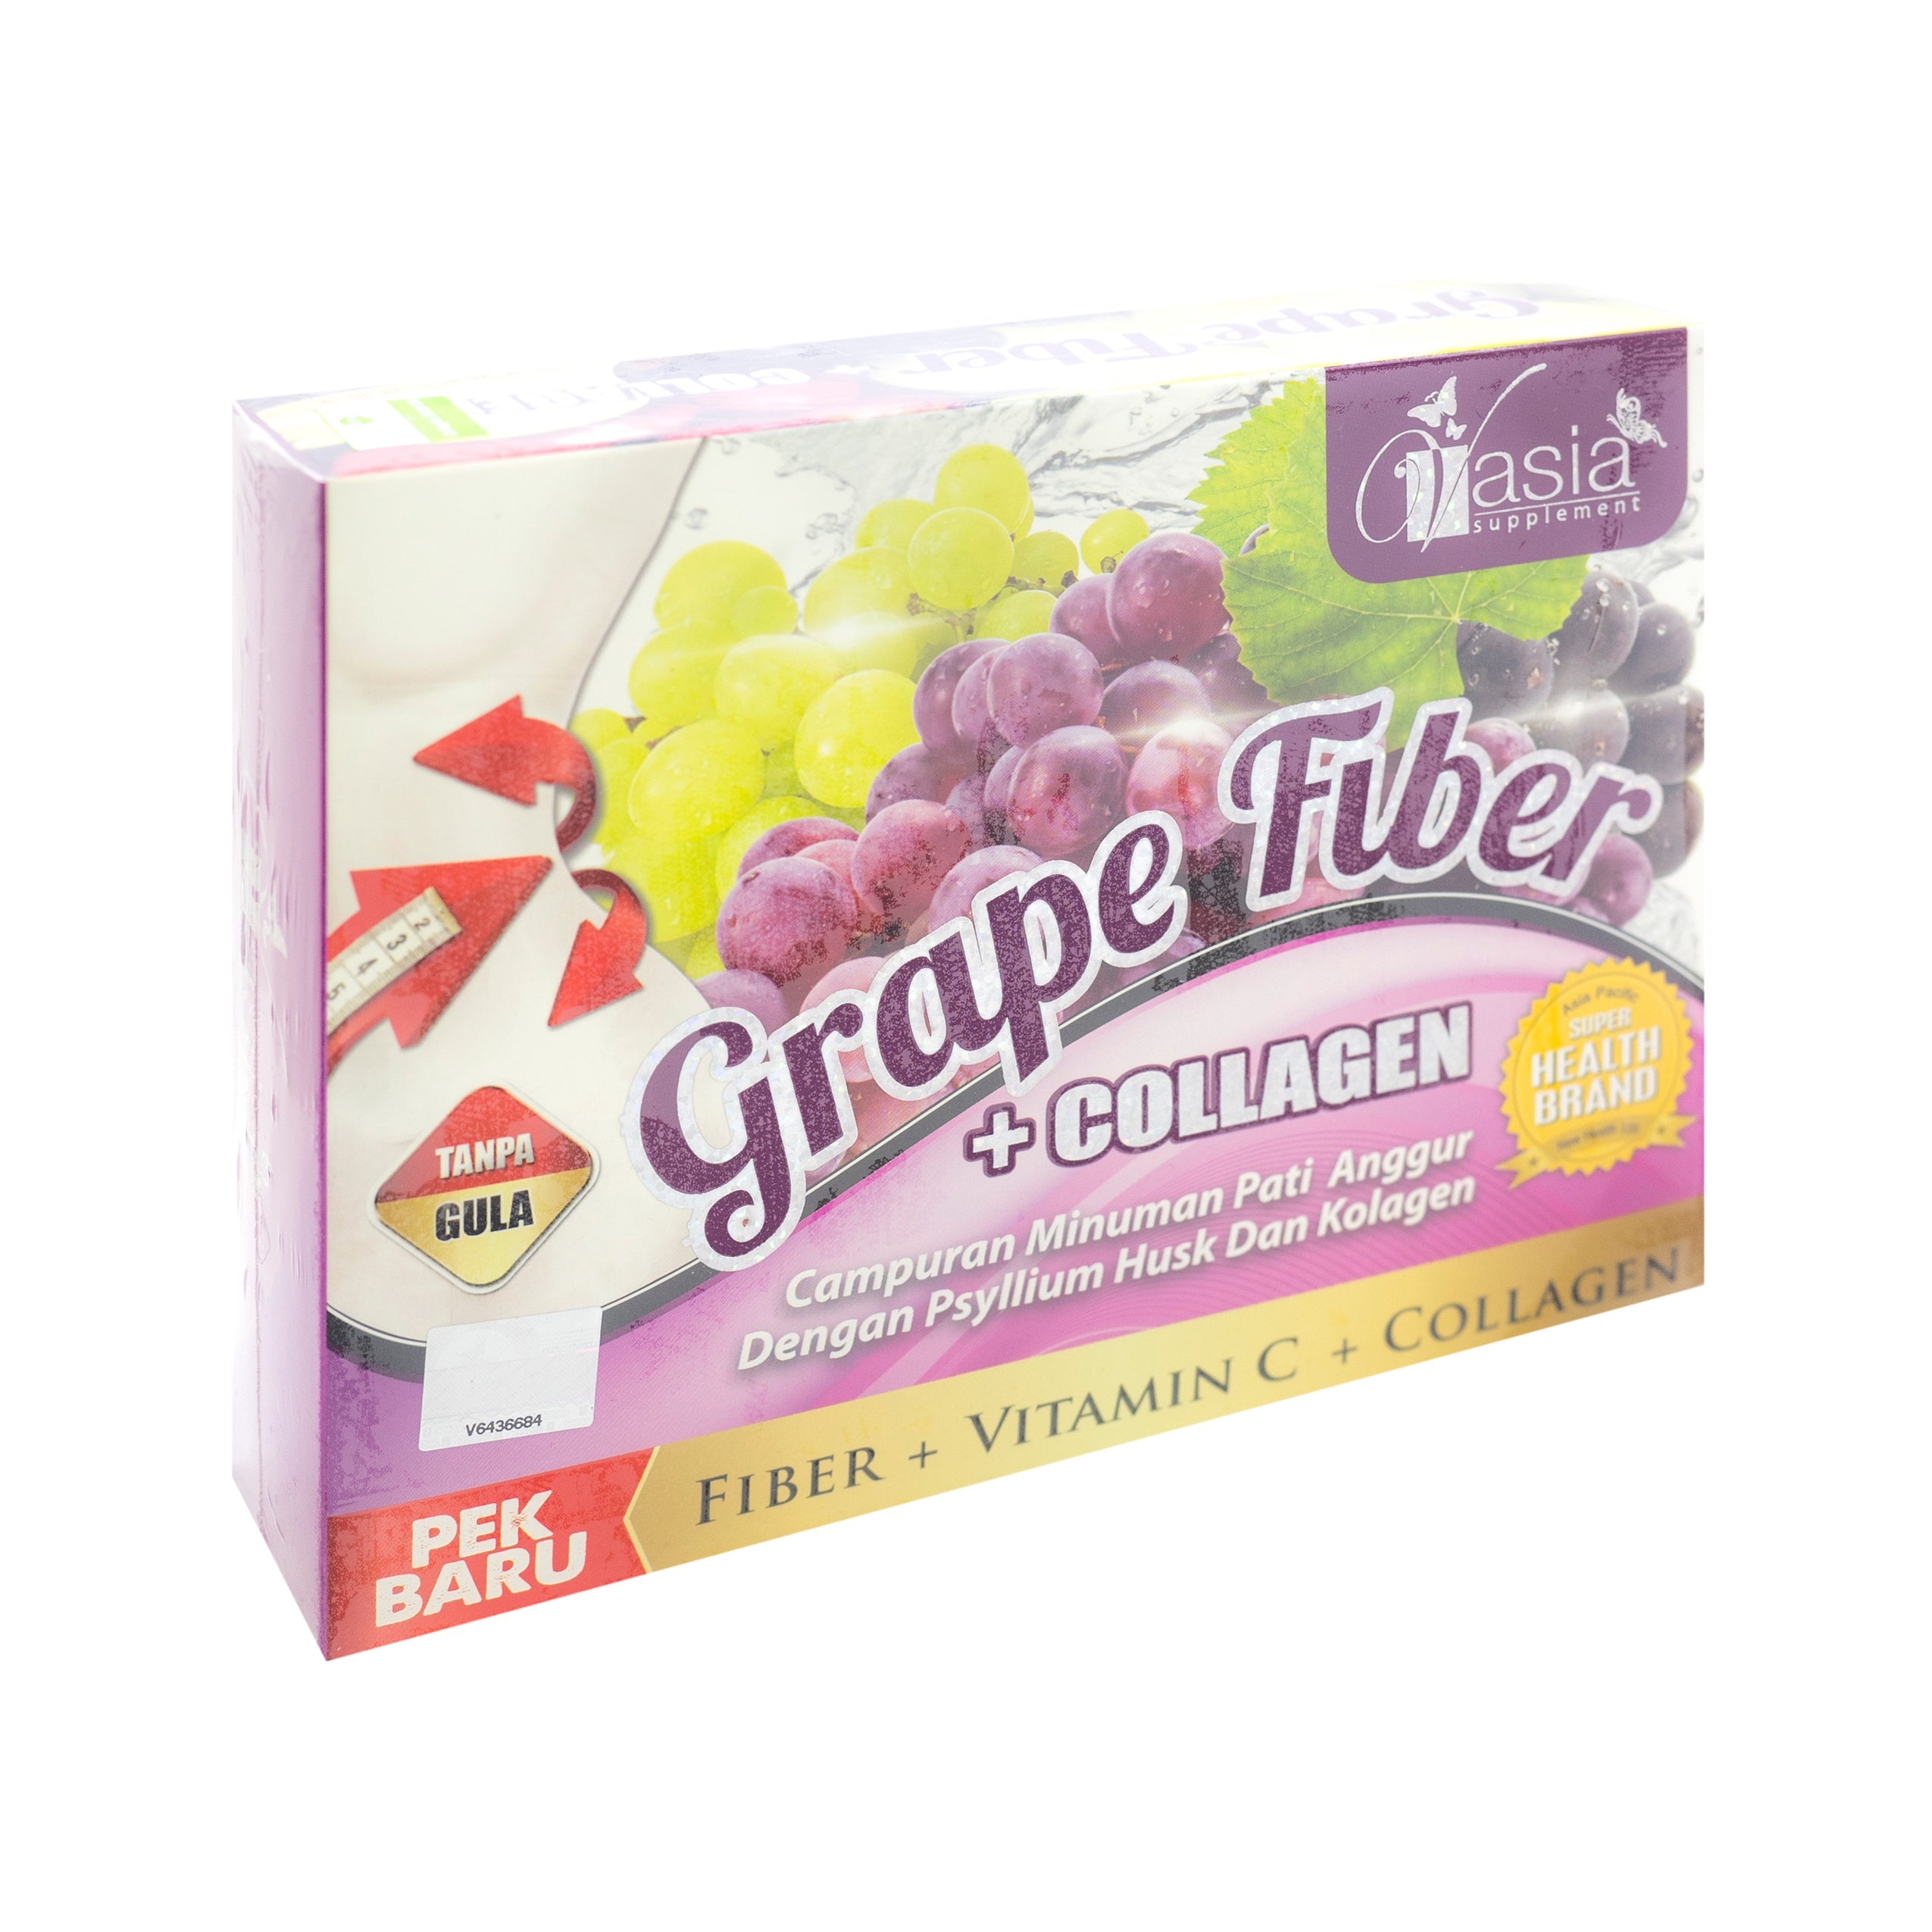 V'Asia, Grape Fiber + Collage, 10 sachets X 15 gm